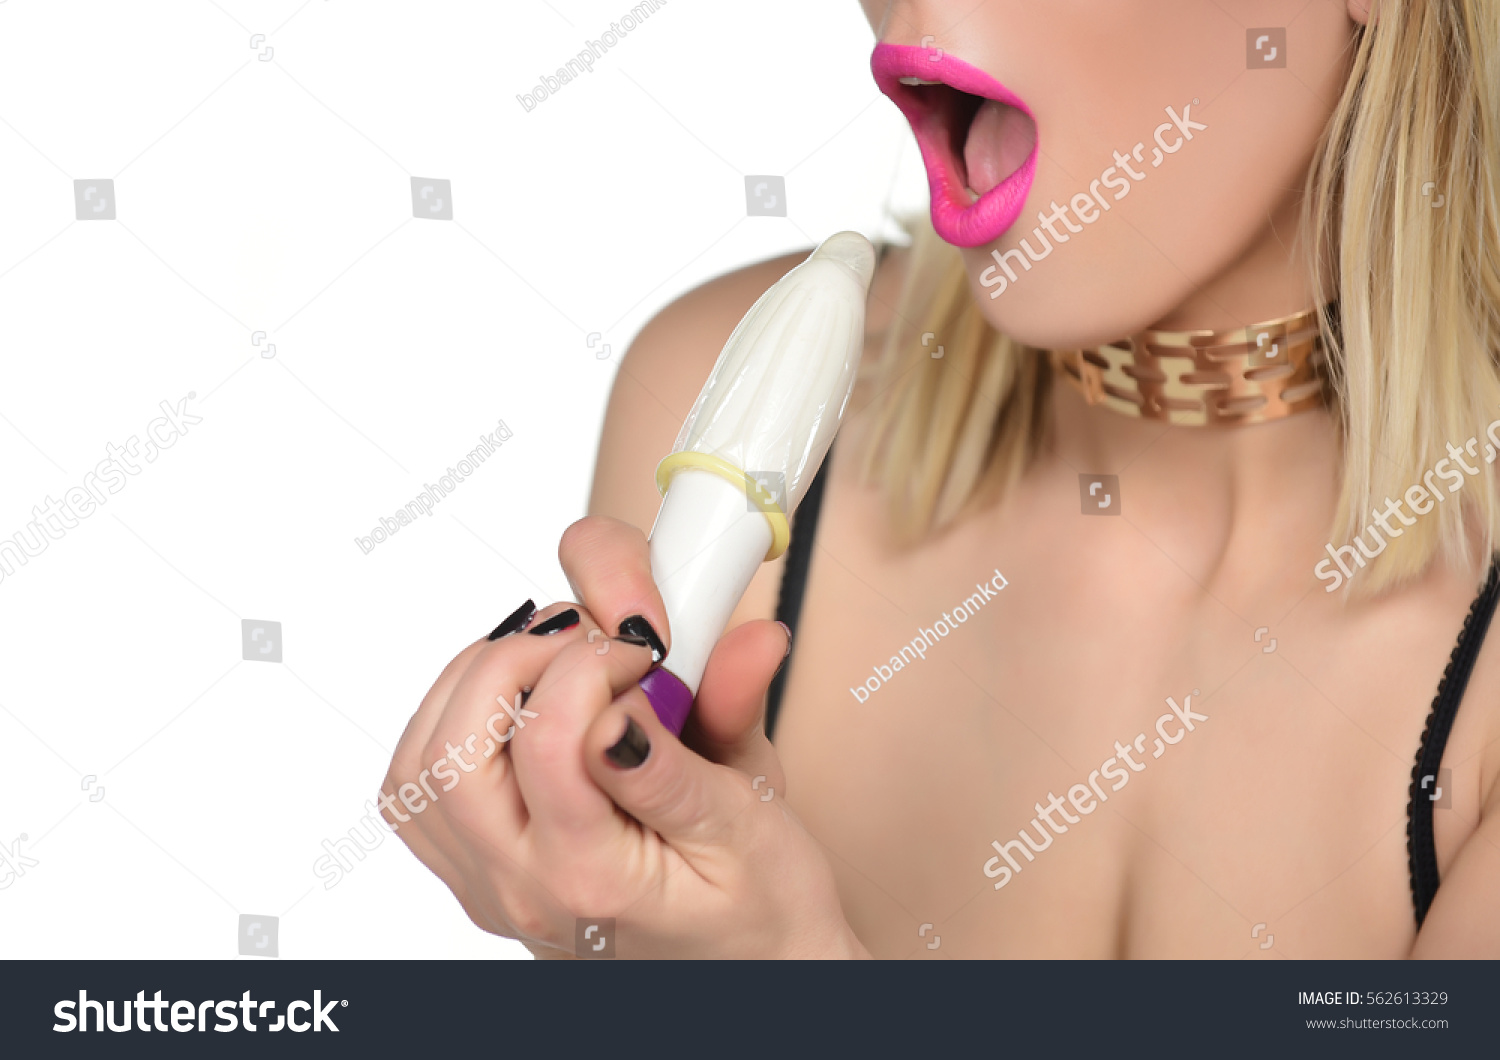 Naked women with plastic penus